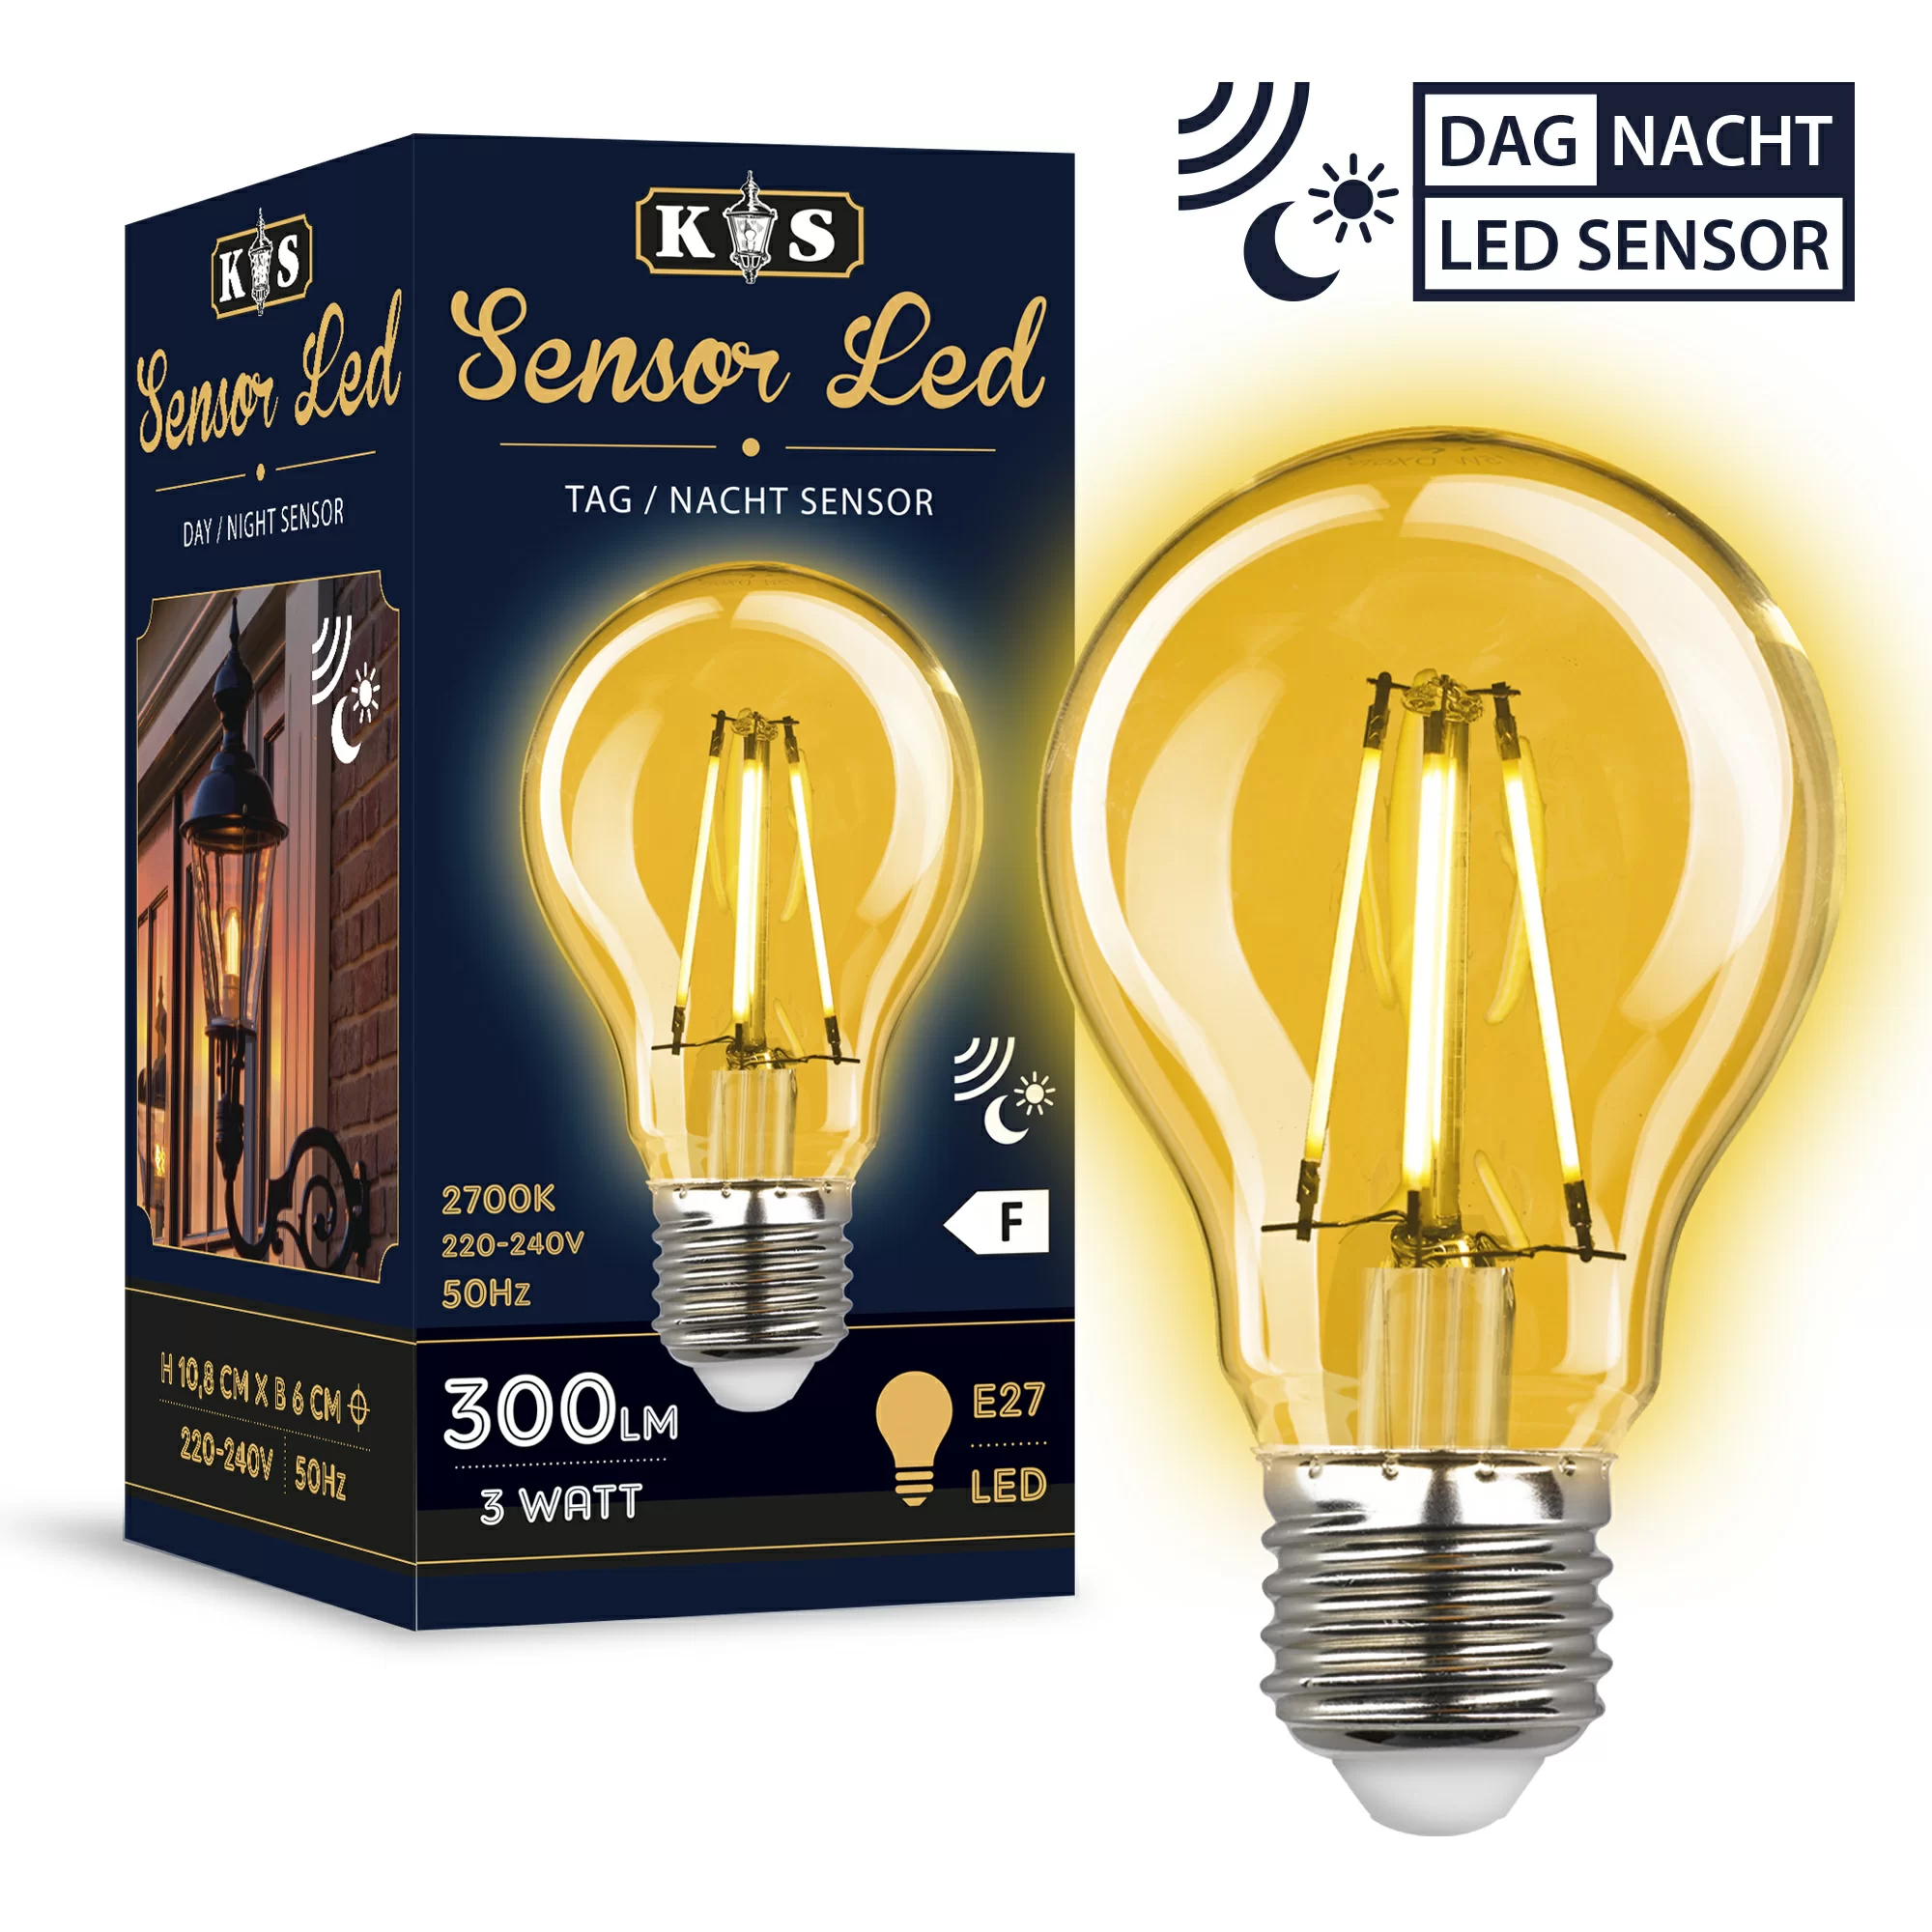 Sensor LED light source Official site KS outdoor lighting company